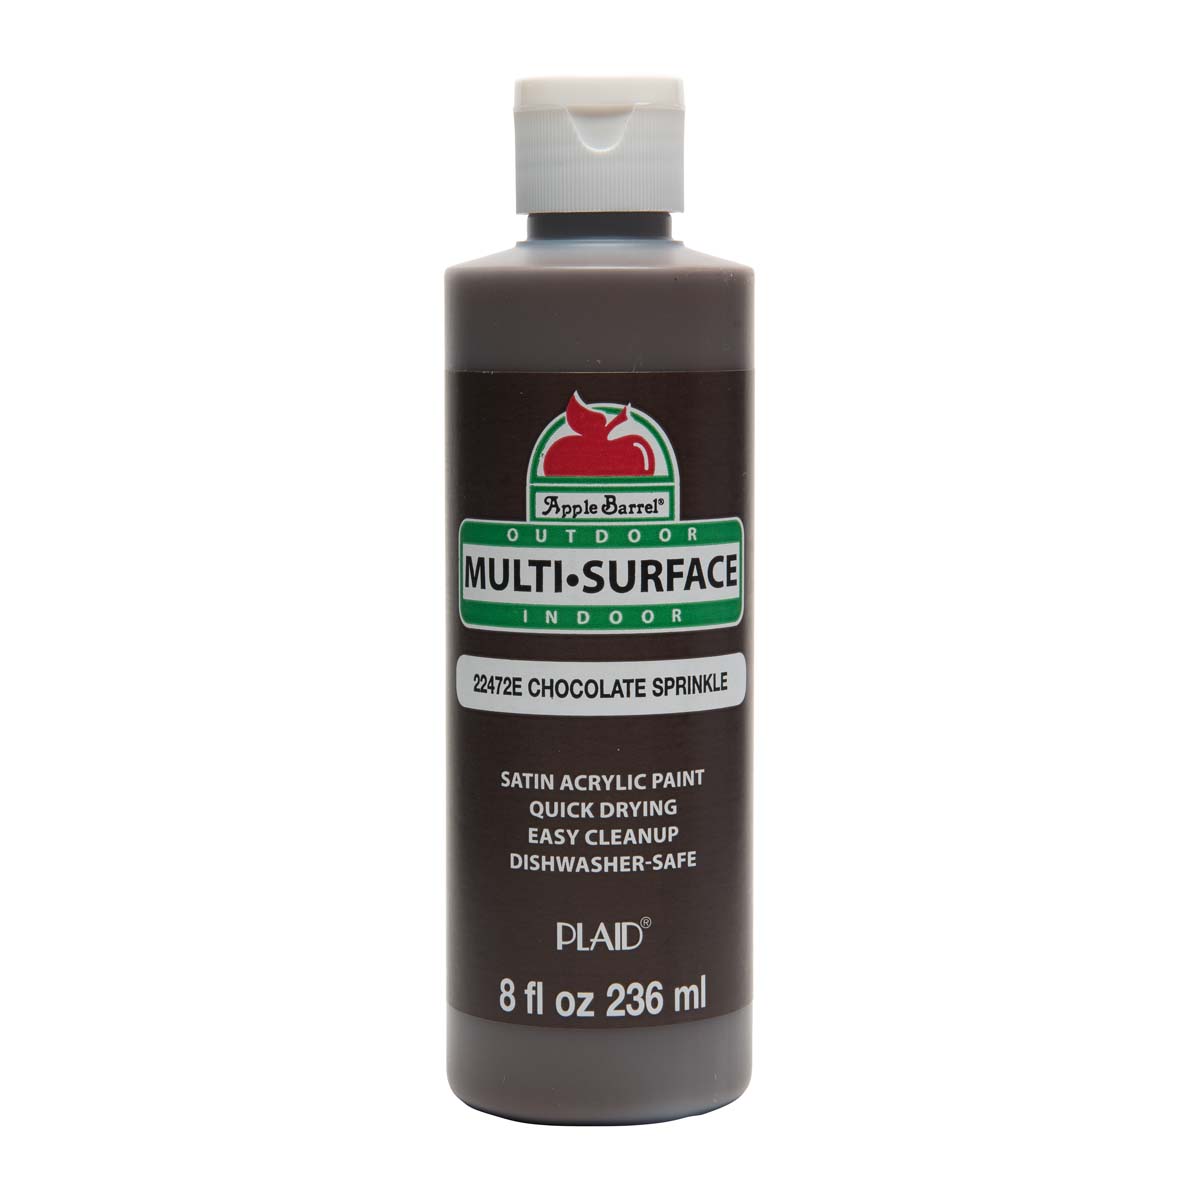 Apple Barrel ® Multi-Surface Satin Acrylic Paints - Chocolate Sprinkle, 8 oz. - 22472E